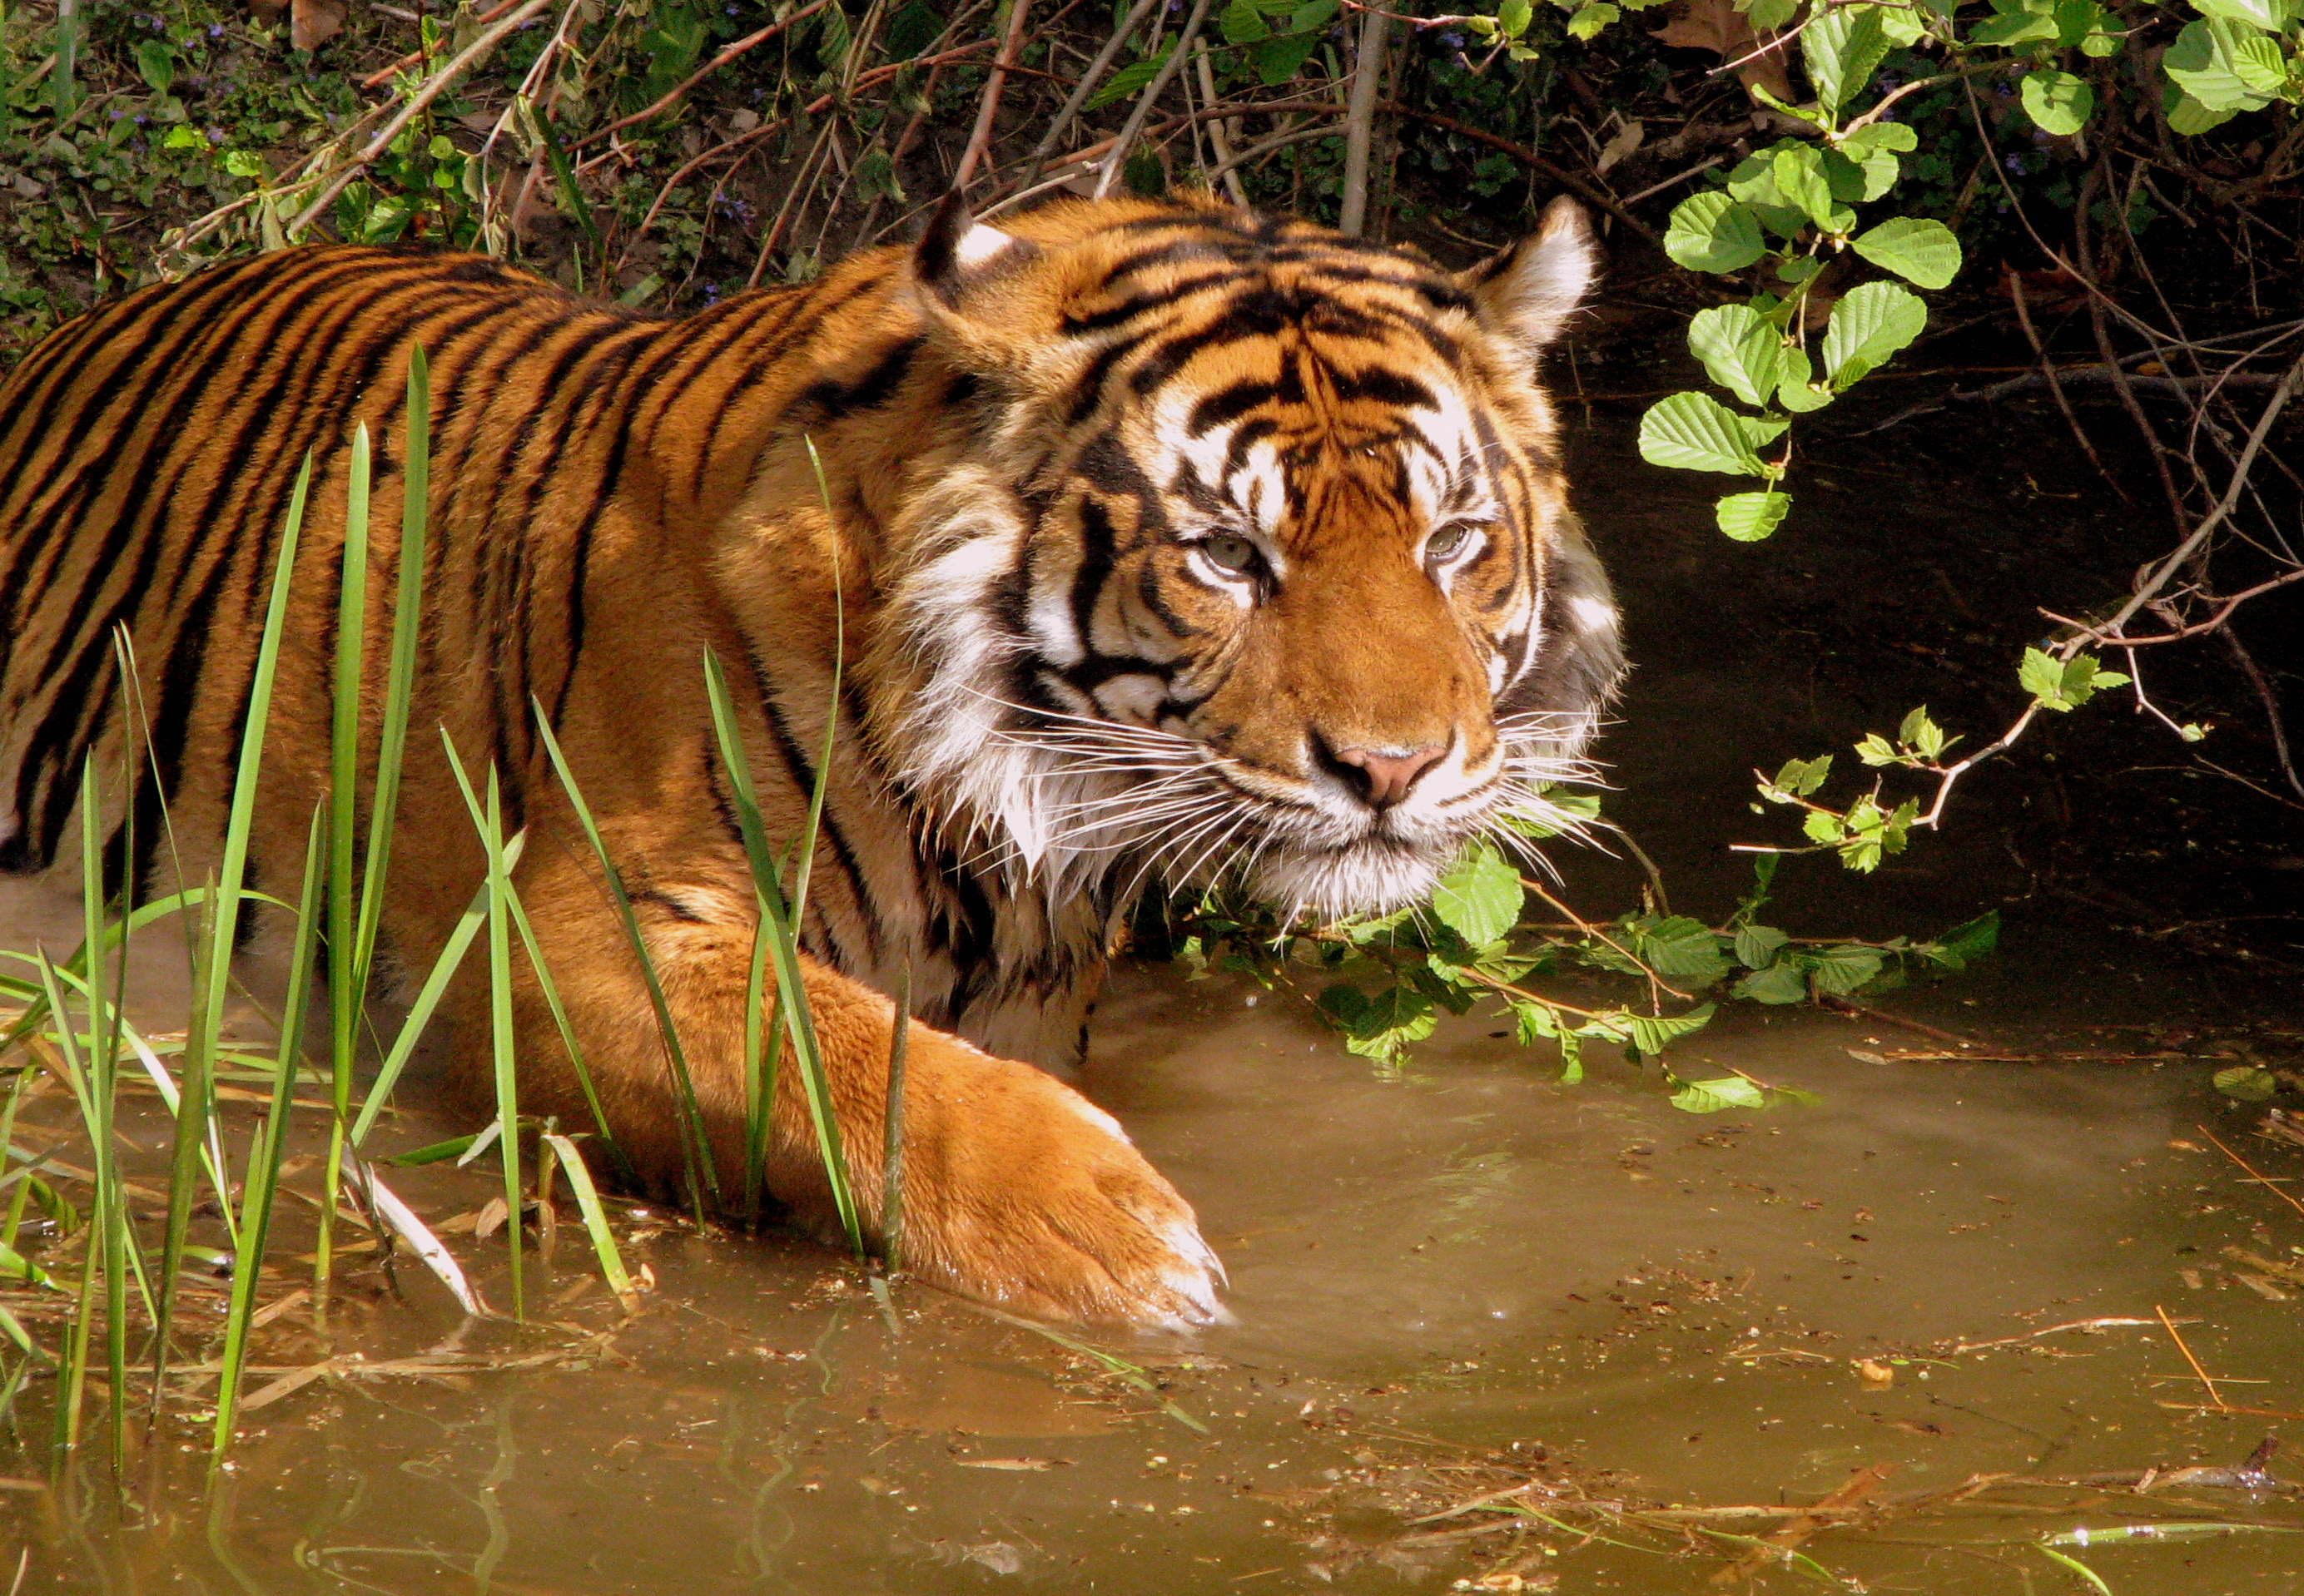 http://upload.wikimedia.org/wikipedia/commons/2/23/Tiger_2.jpg